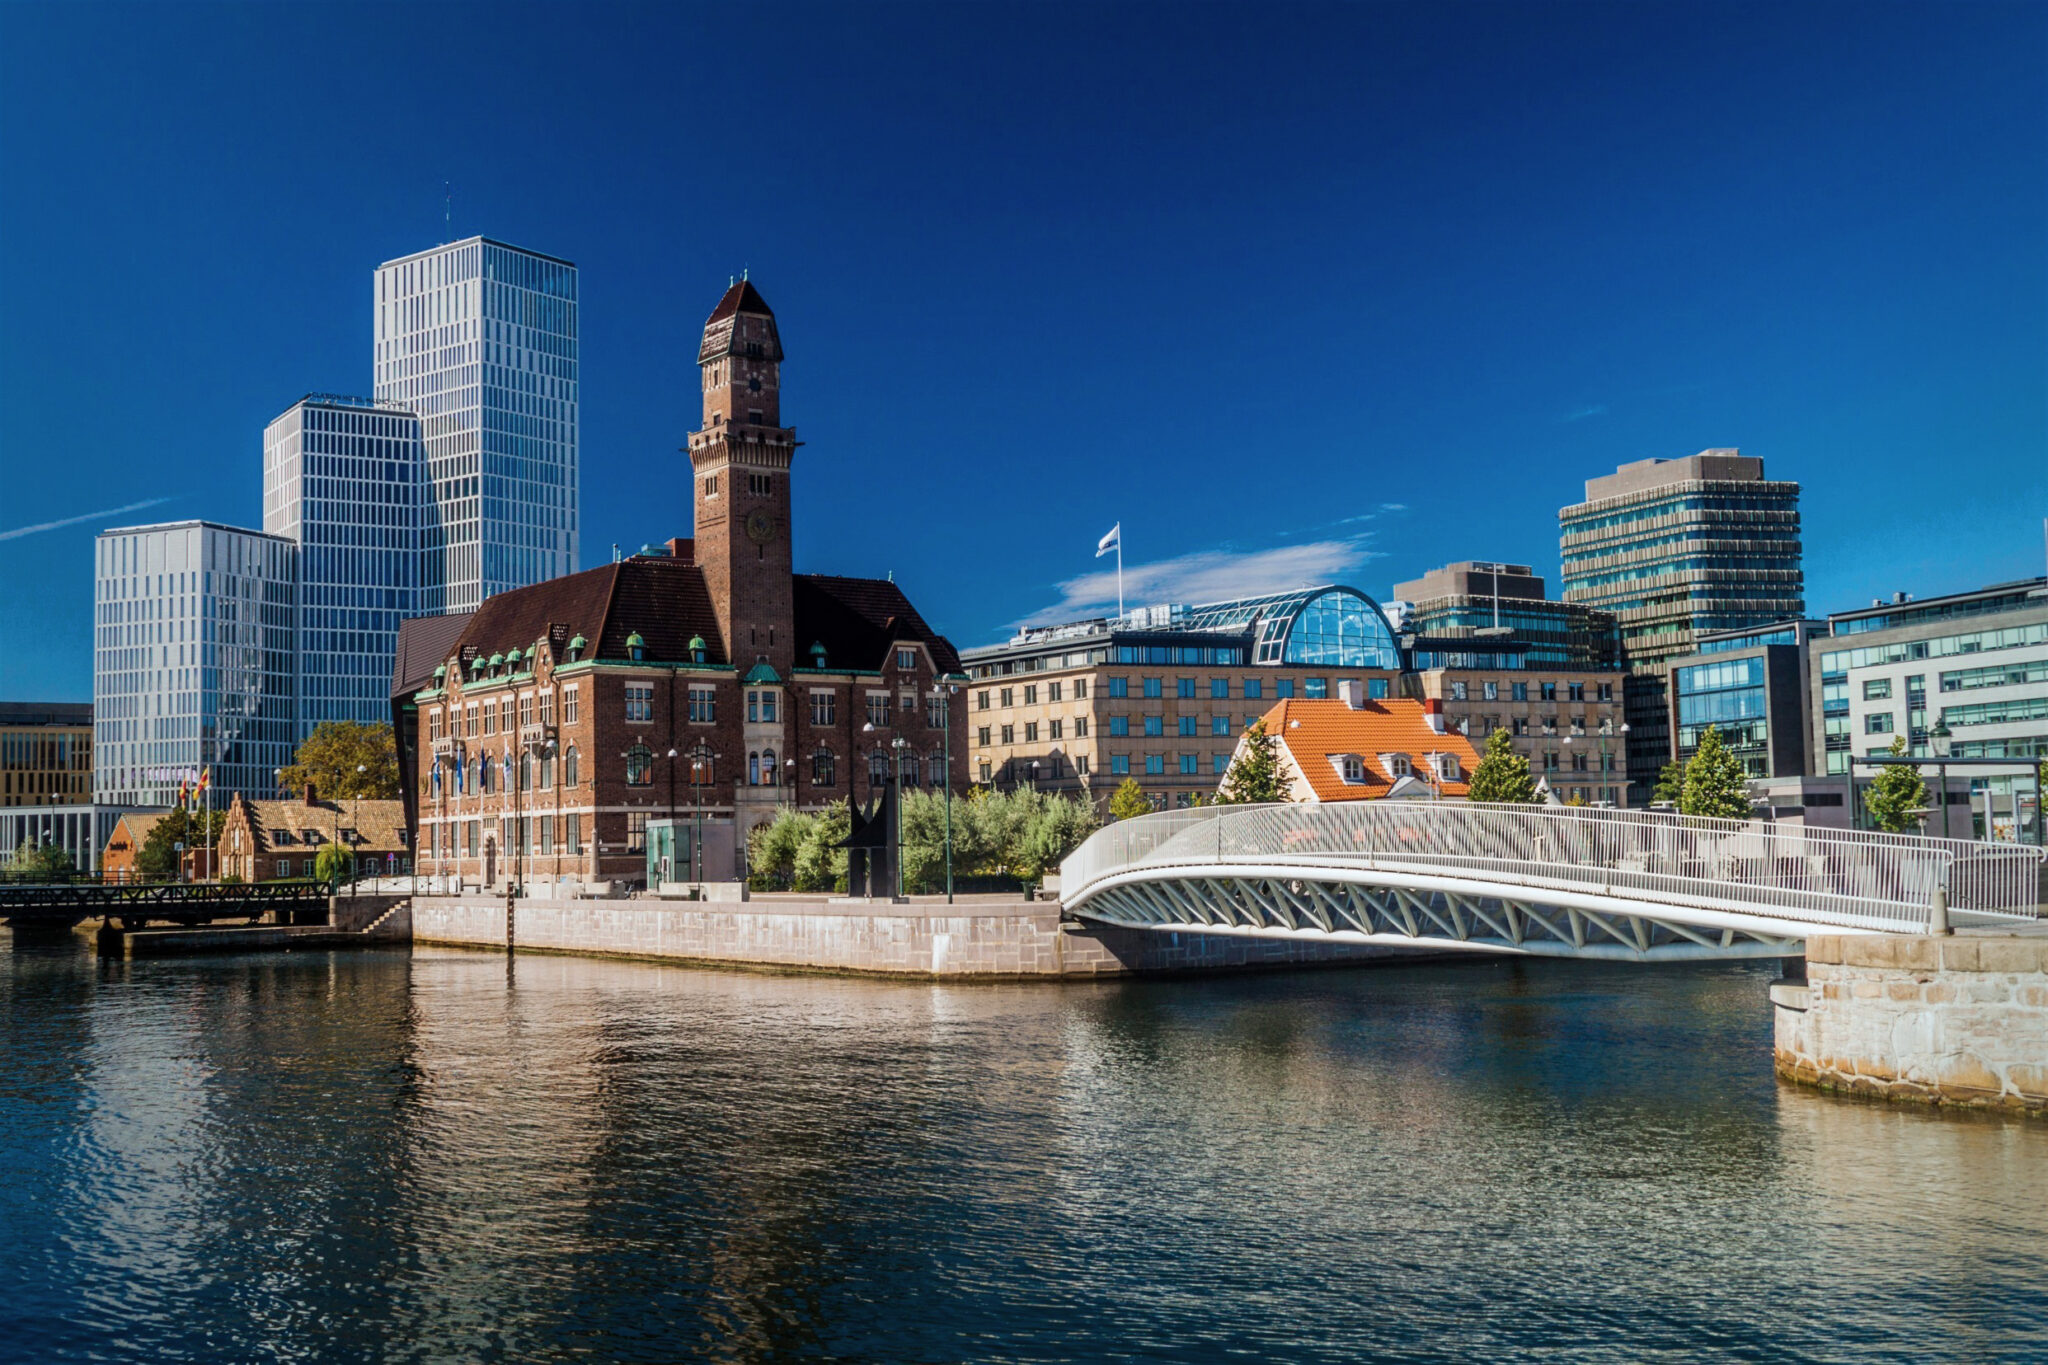 Malmö in Sweden